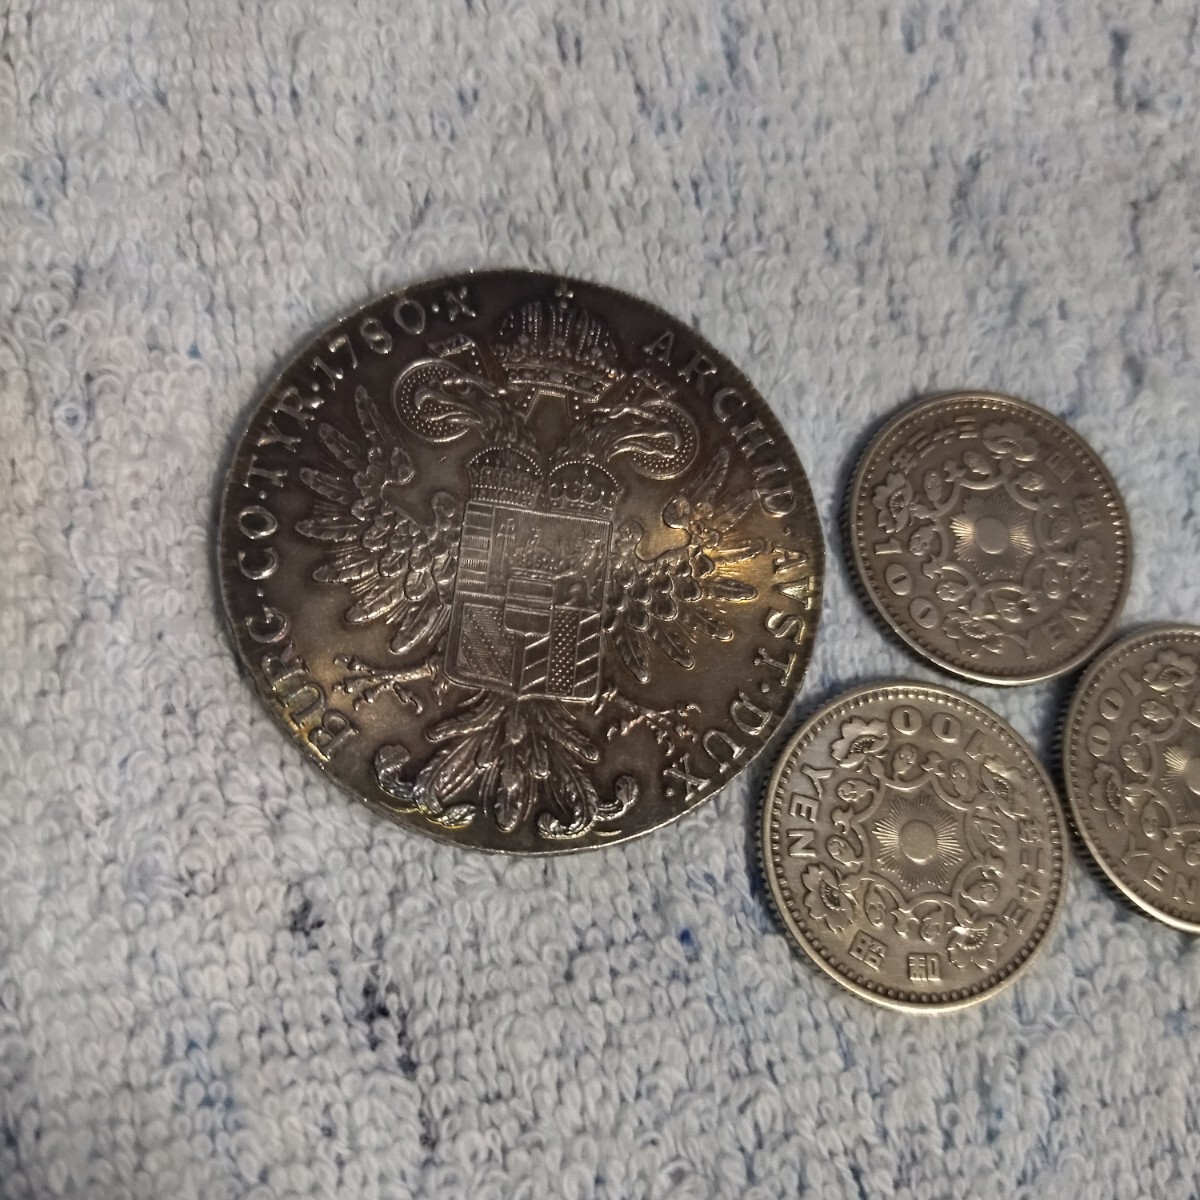  Japan Australia phoenix 100 jpy silver coin Mali a*terejia silver coin coin old coin 